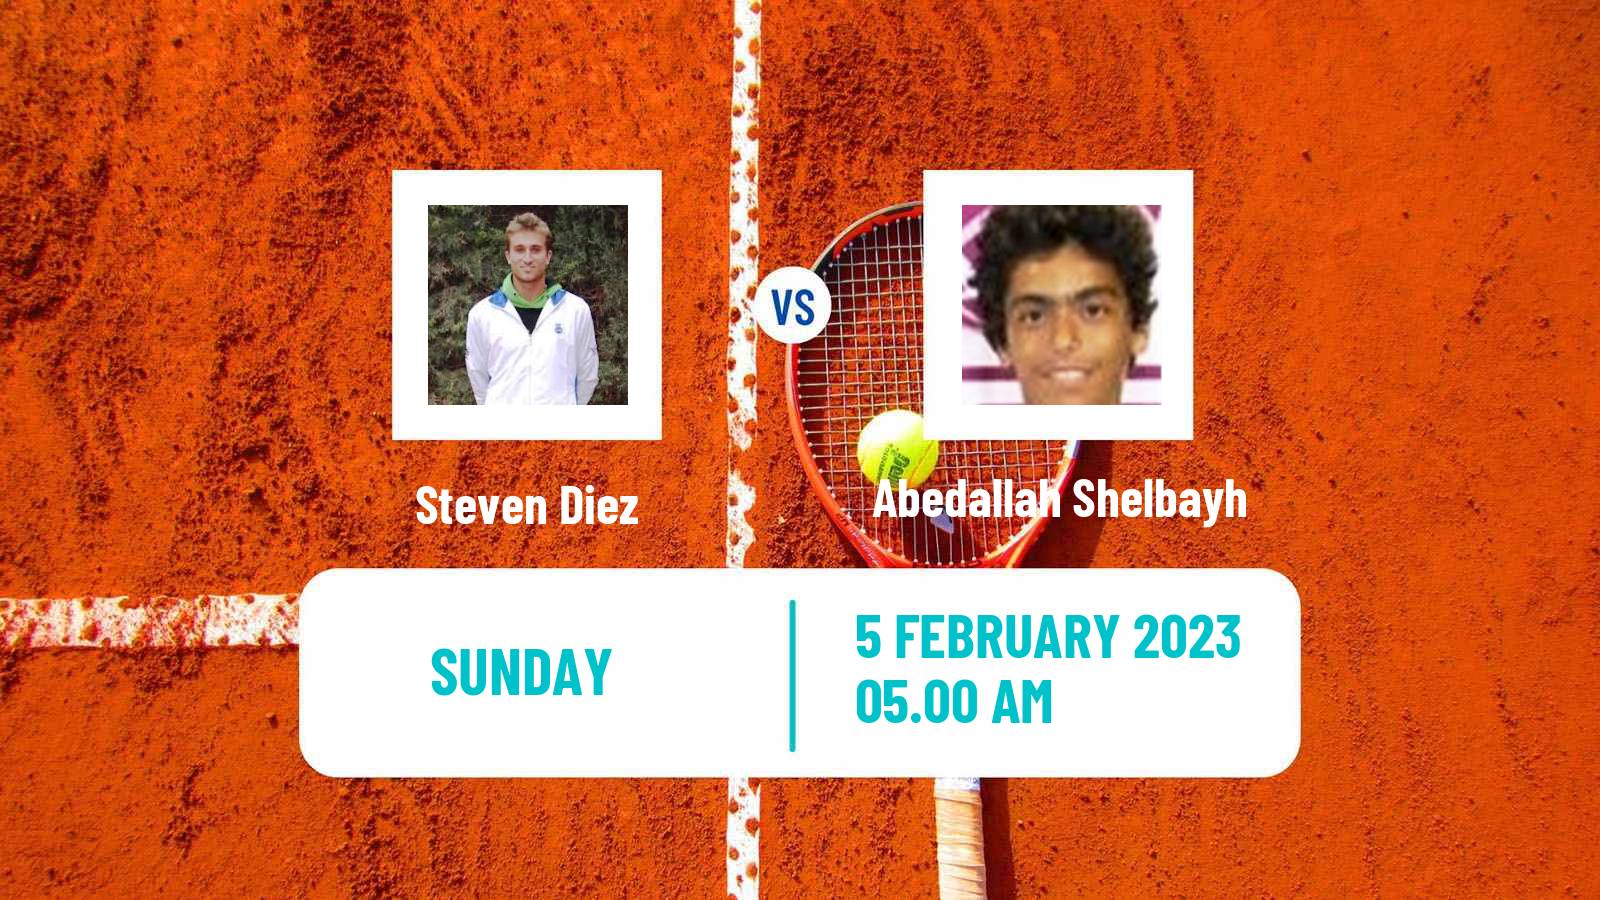 Tennis ATP Challenger Steven Diez - Abedallah Shelbayh